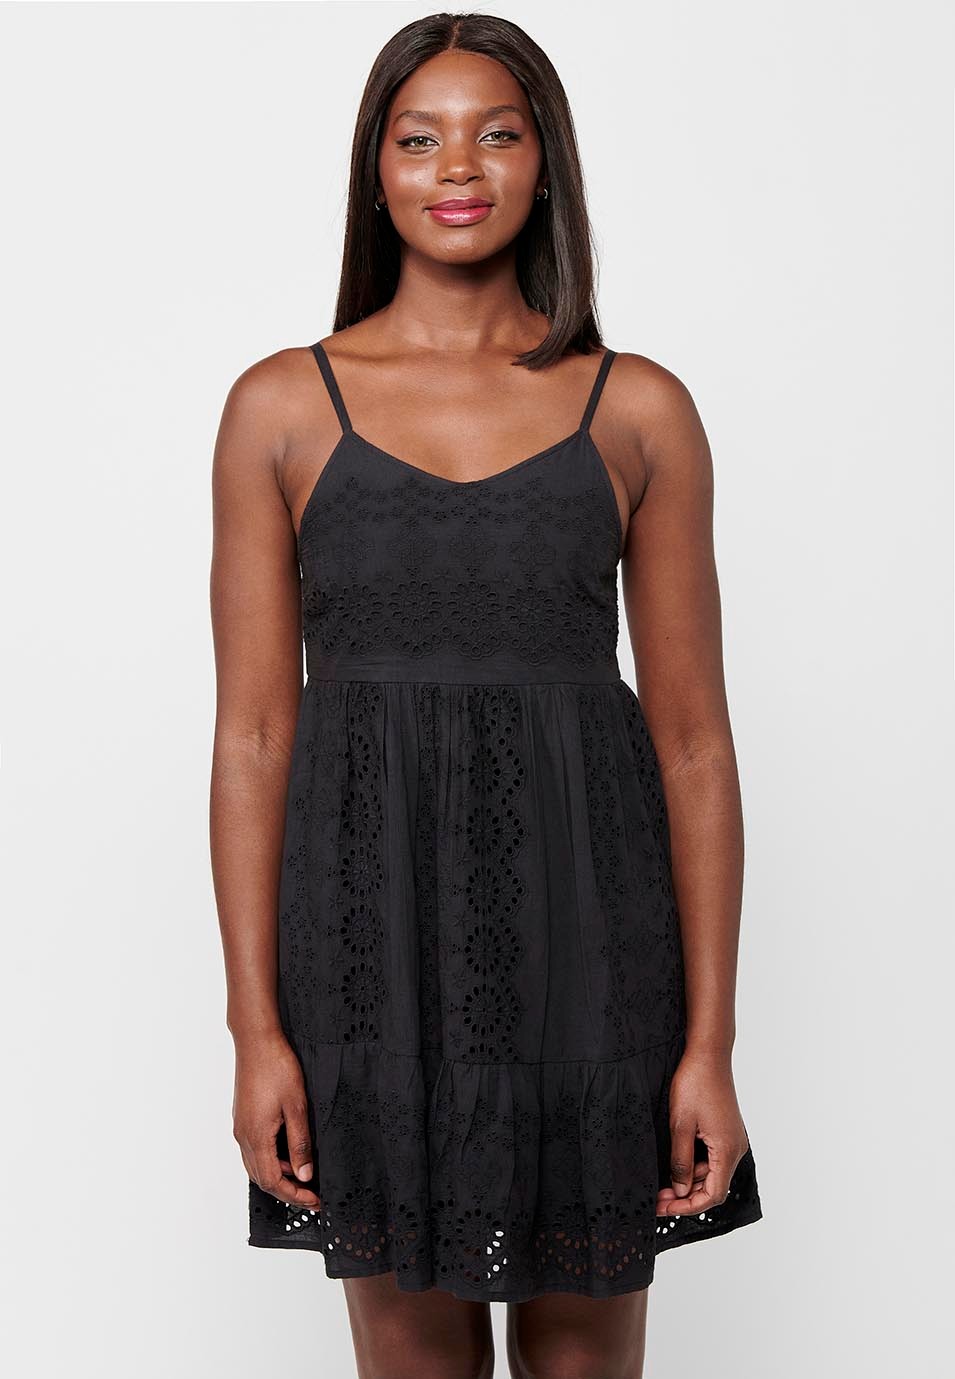 Strap dress, V-neck, embroidered fabric, Black color for women